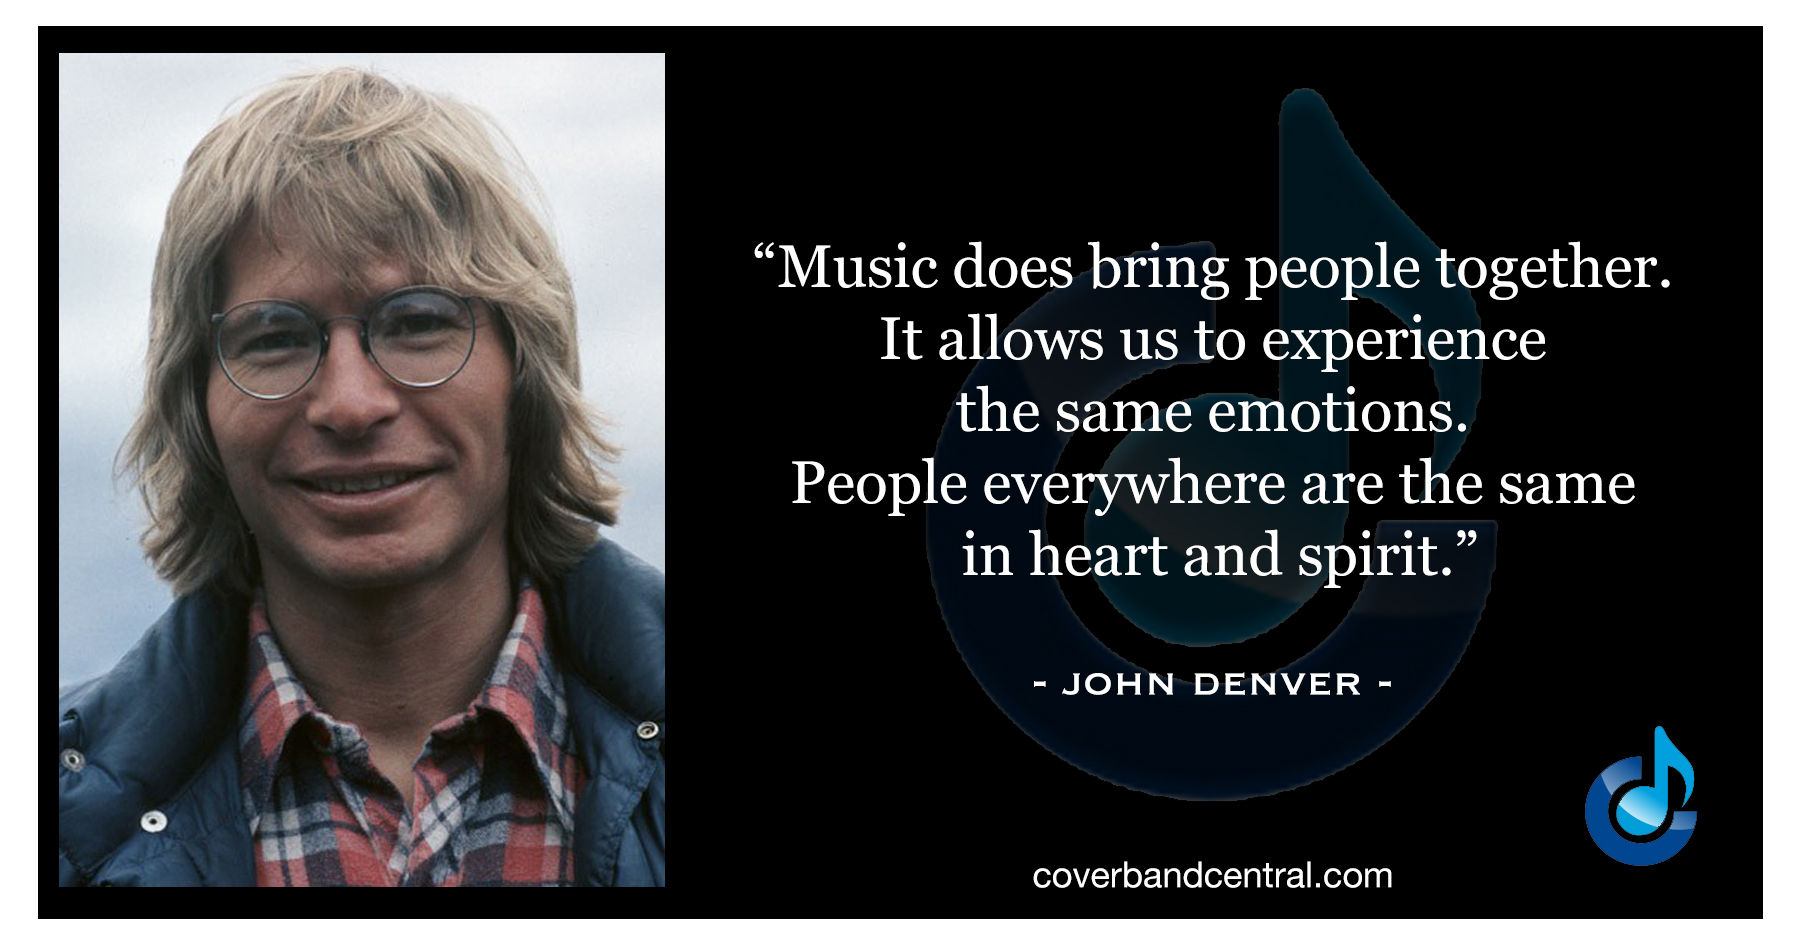 John Denver quote